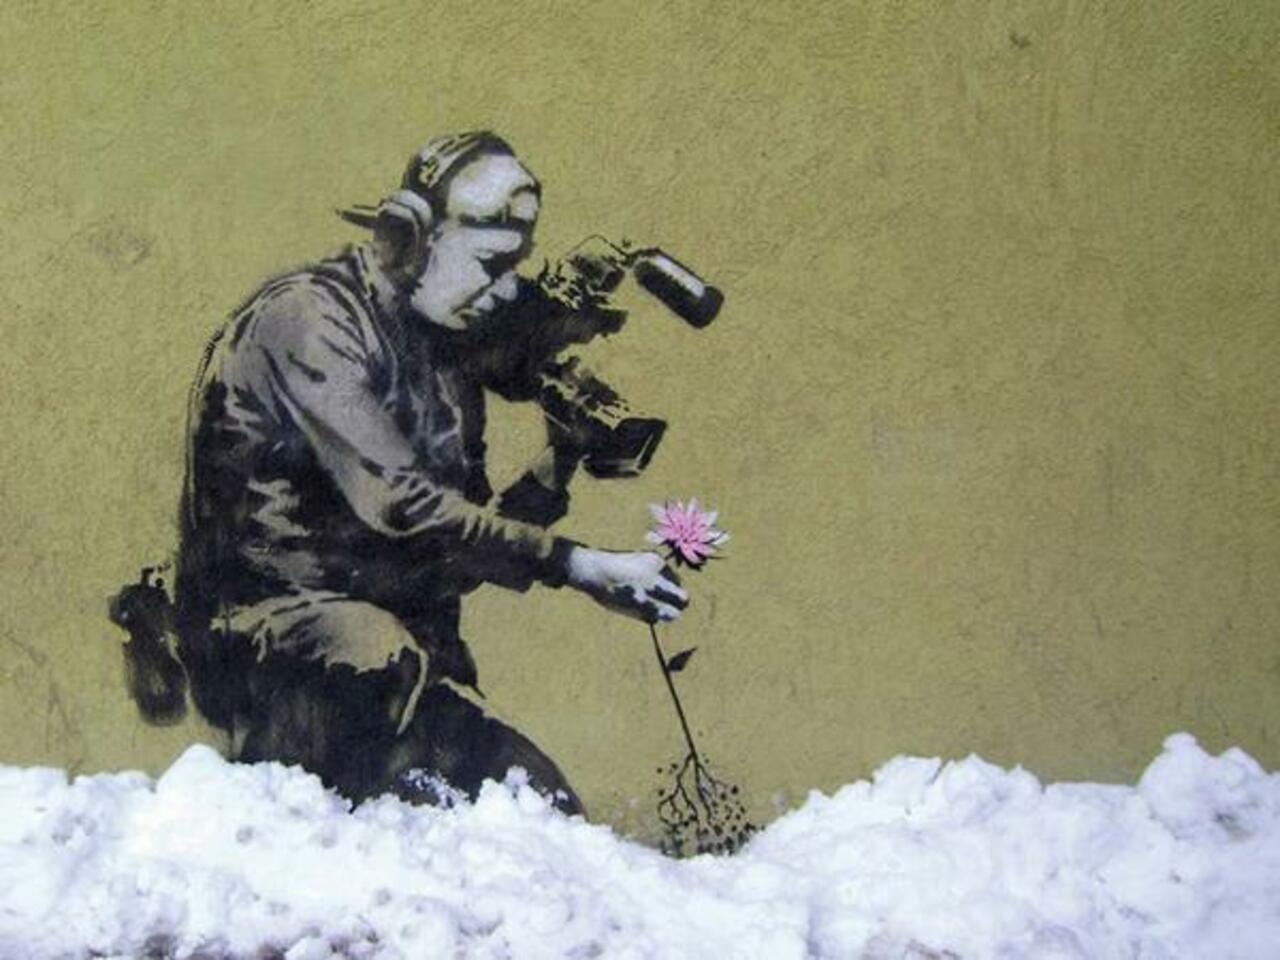 “@upbyartists: BANKSY #streetart #painting #mural #art #photo #urban #graffiti #world #banksy http://t.co/S3EK70NrjY”@rafalvarado